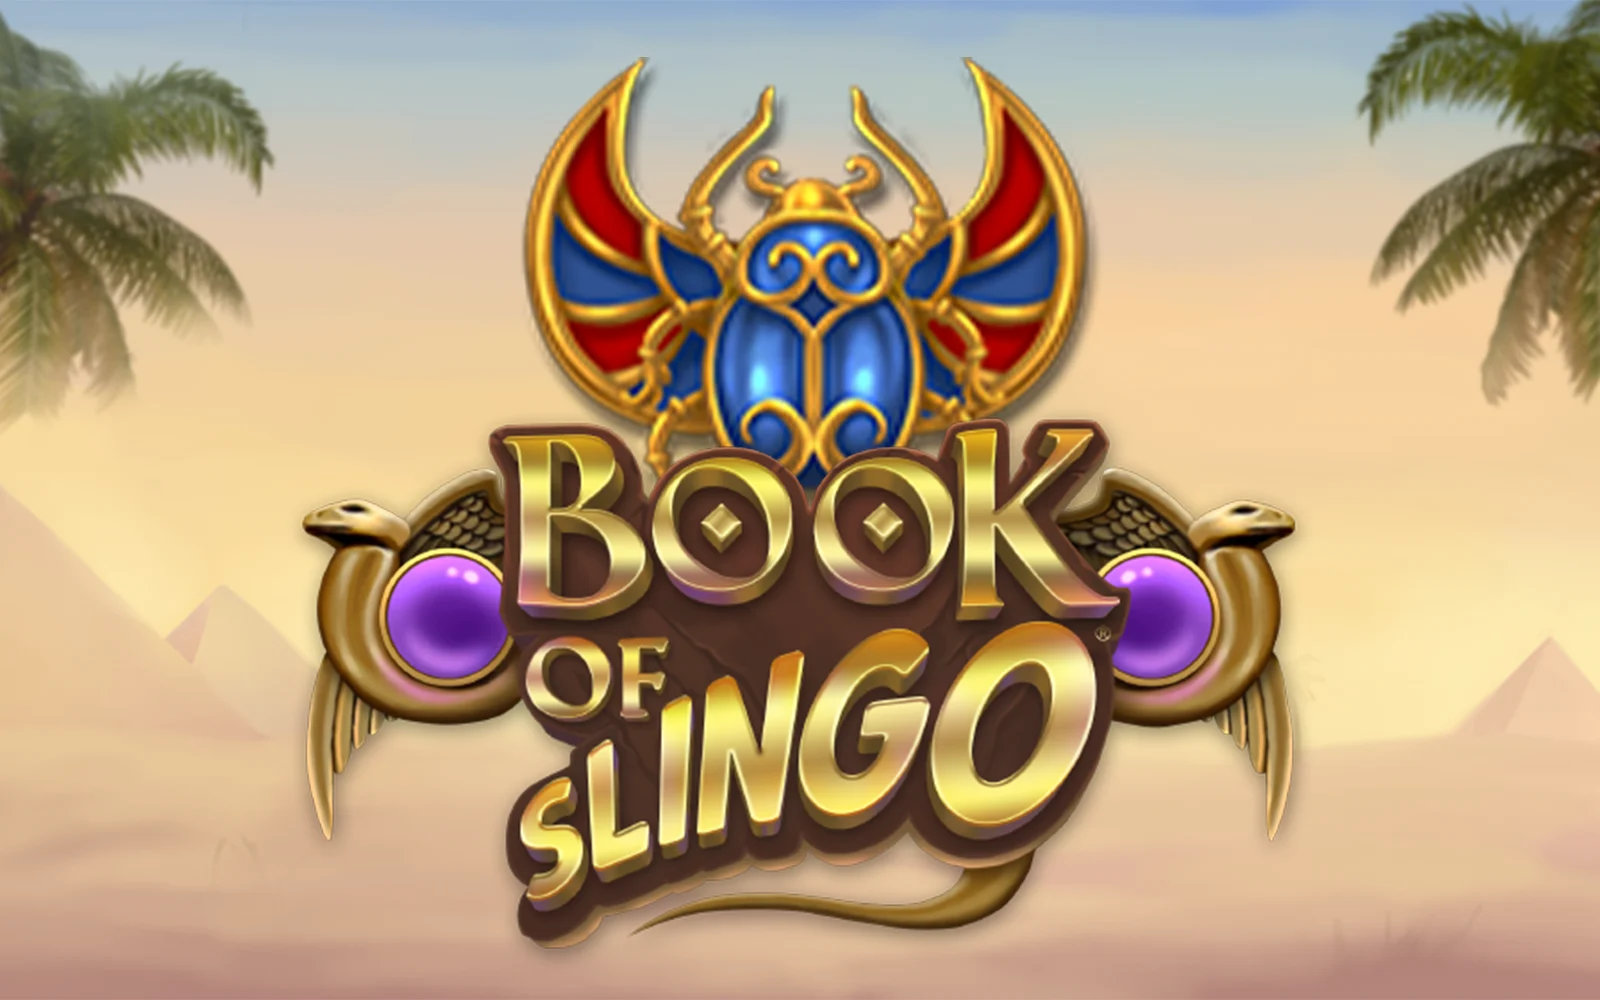 Gioca a Book of Slingo sul casino online Starcasino.be